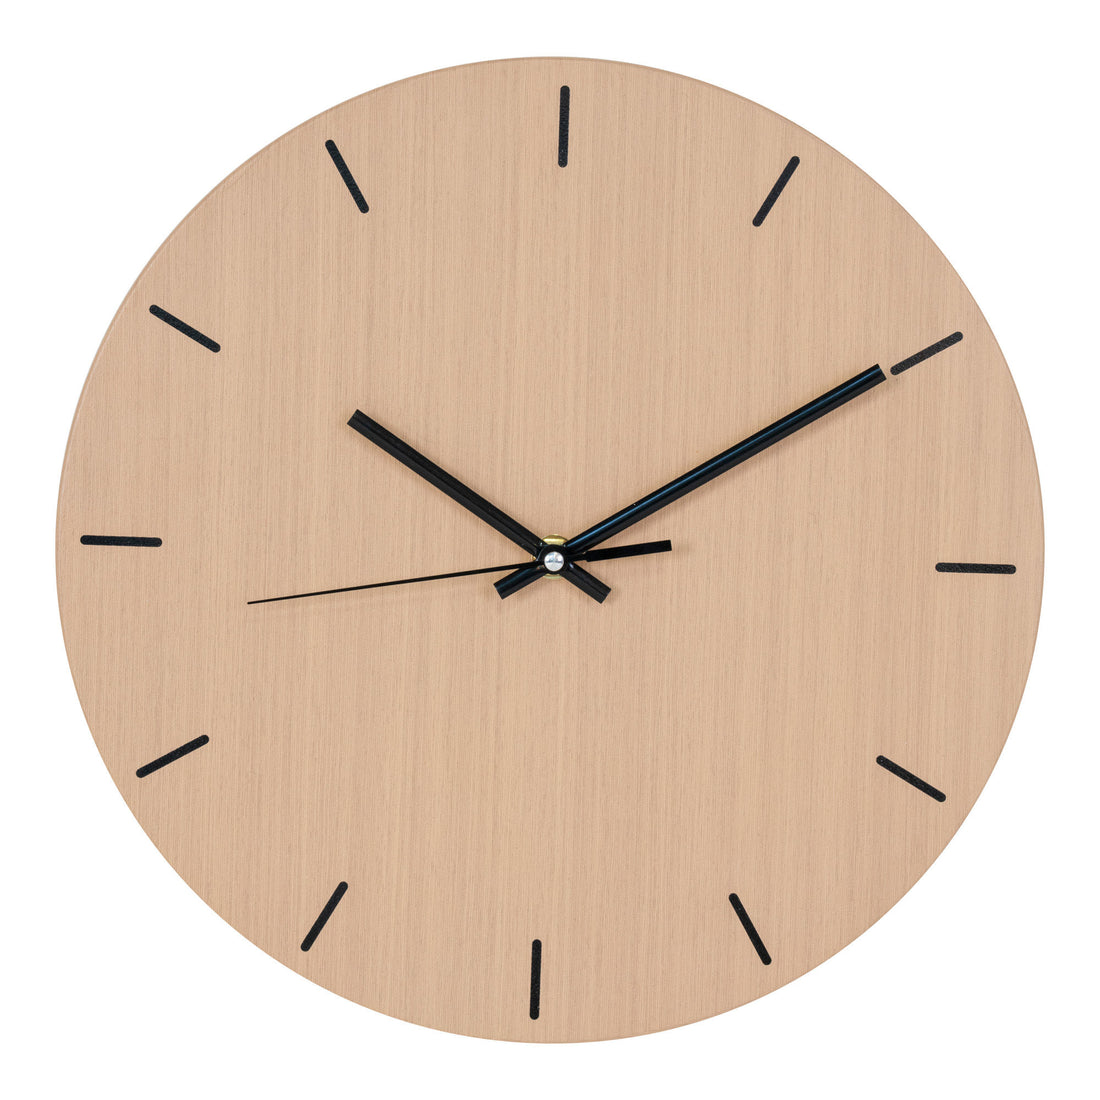 Asti wall clock - wall clock in steel, wooden structure, round, Ø30 cm - 1 - pcs